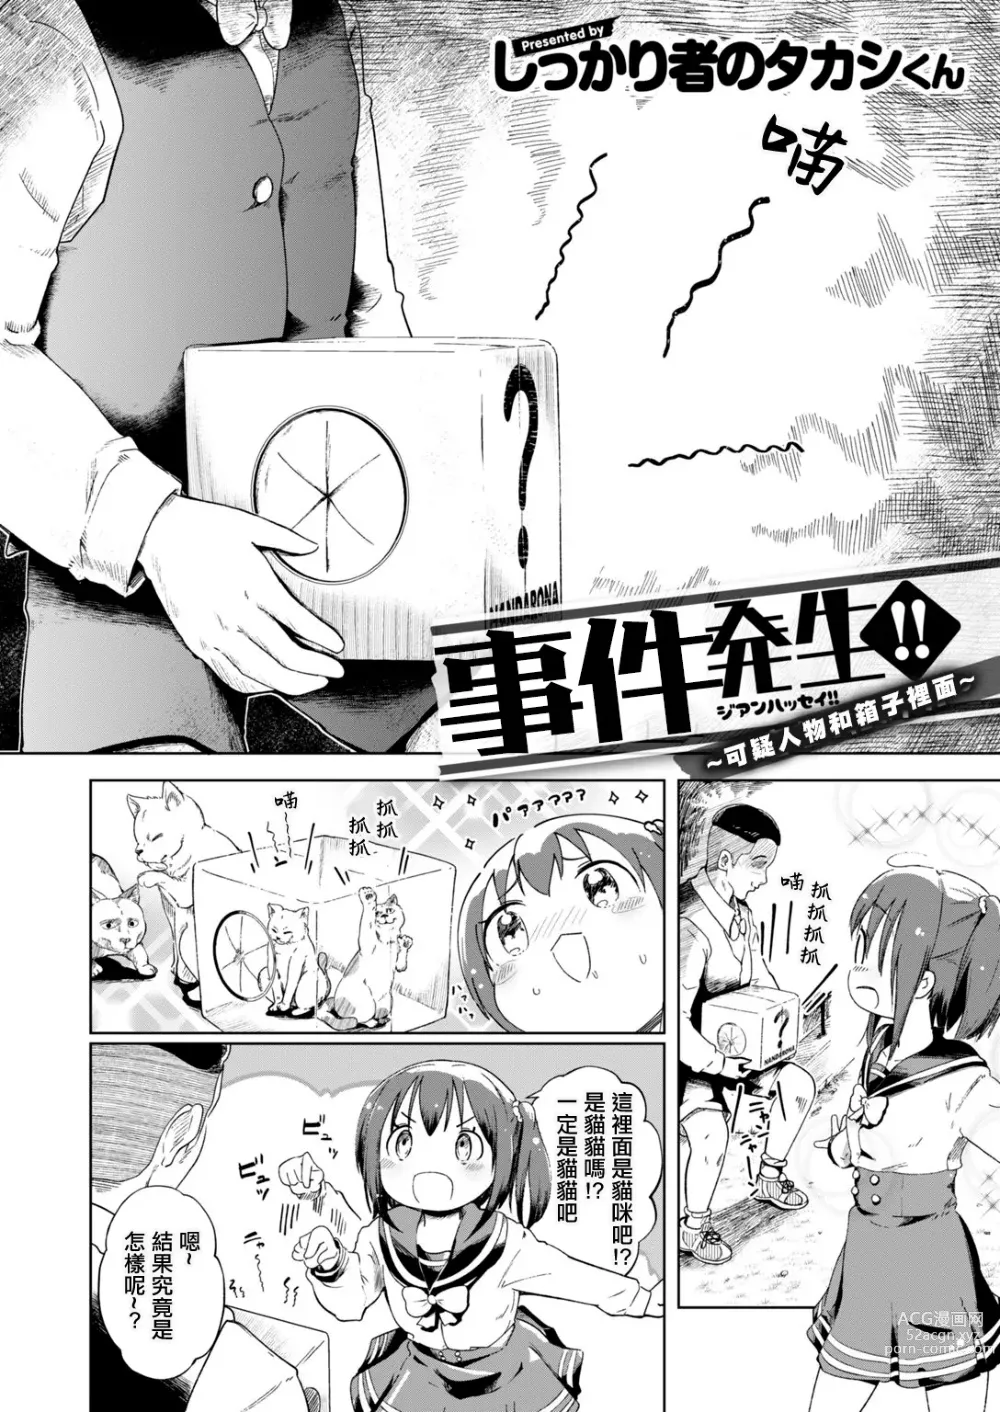 Page 2 of manga  事件發生!! ~可疑人物和箱子裡面~